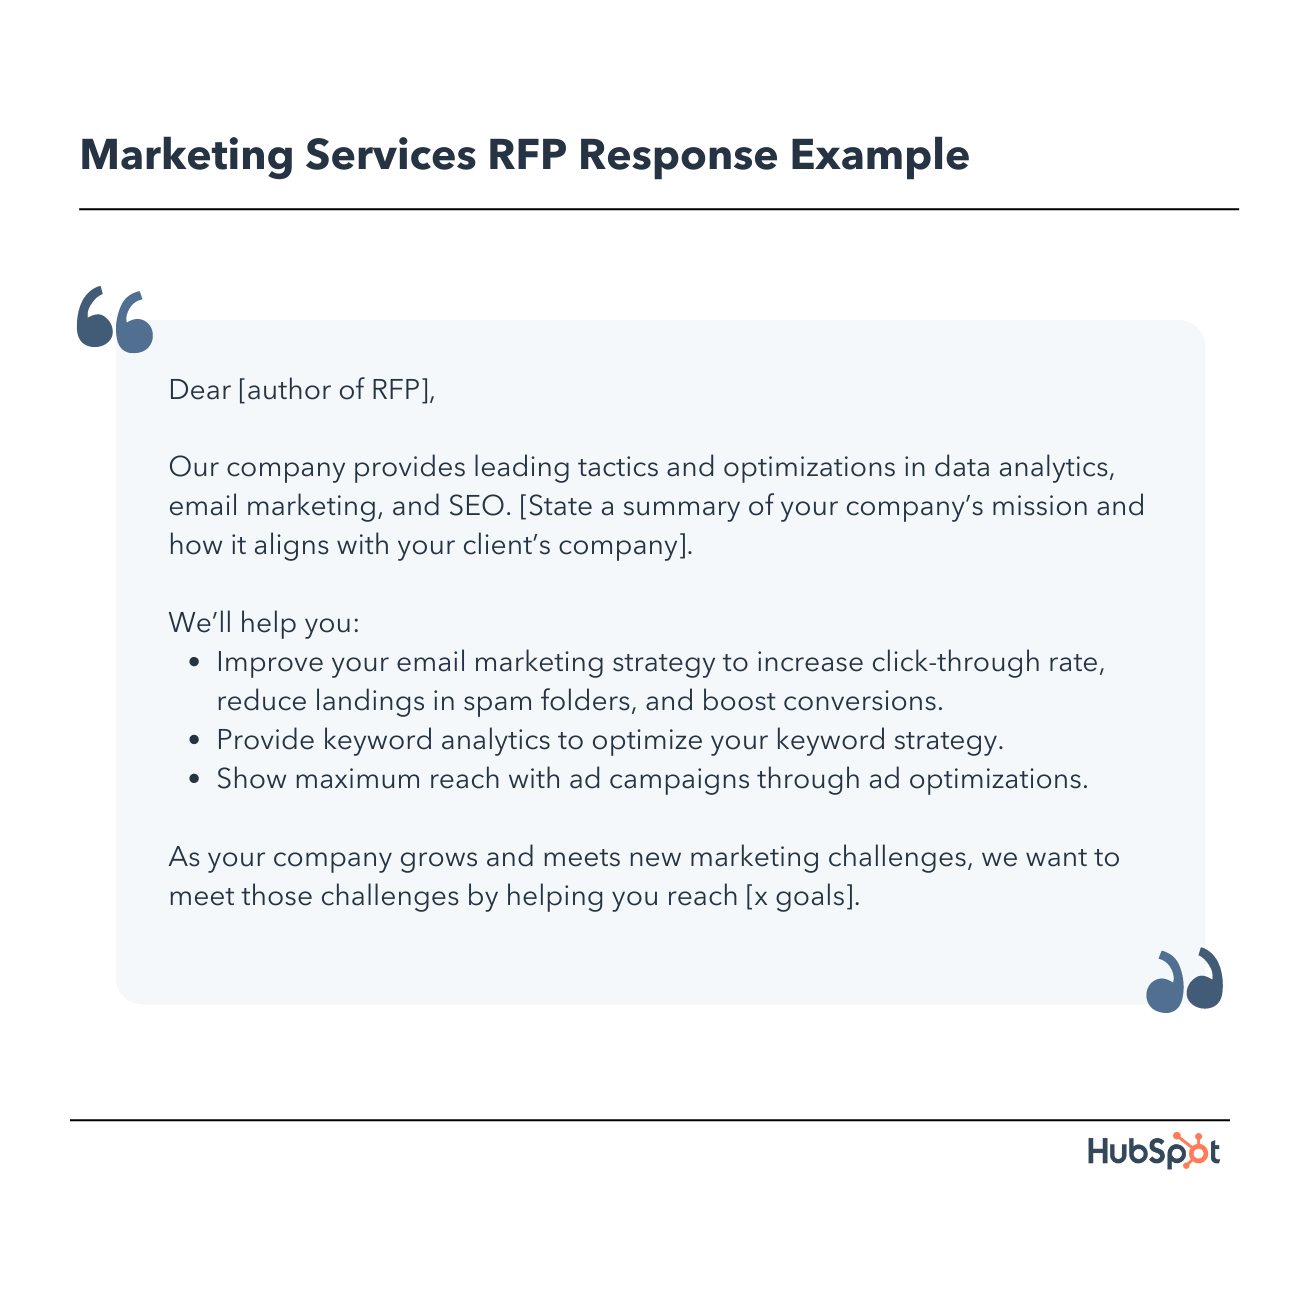 Marketing Services RFP Response